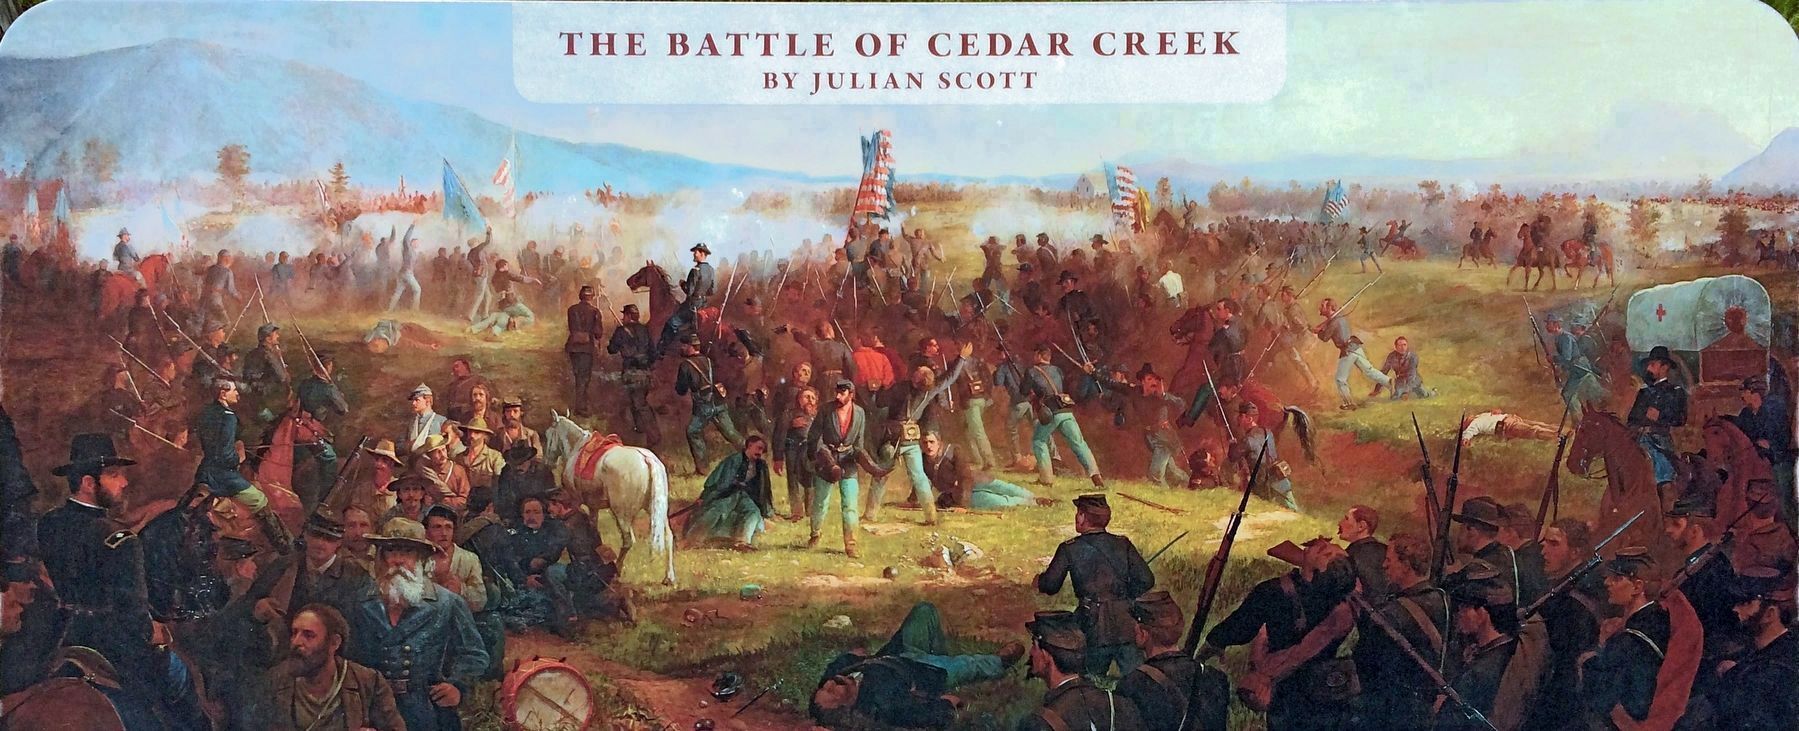 The Battle of Cedar Creek<br>by Julian Scott image. Click for full size.